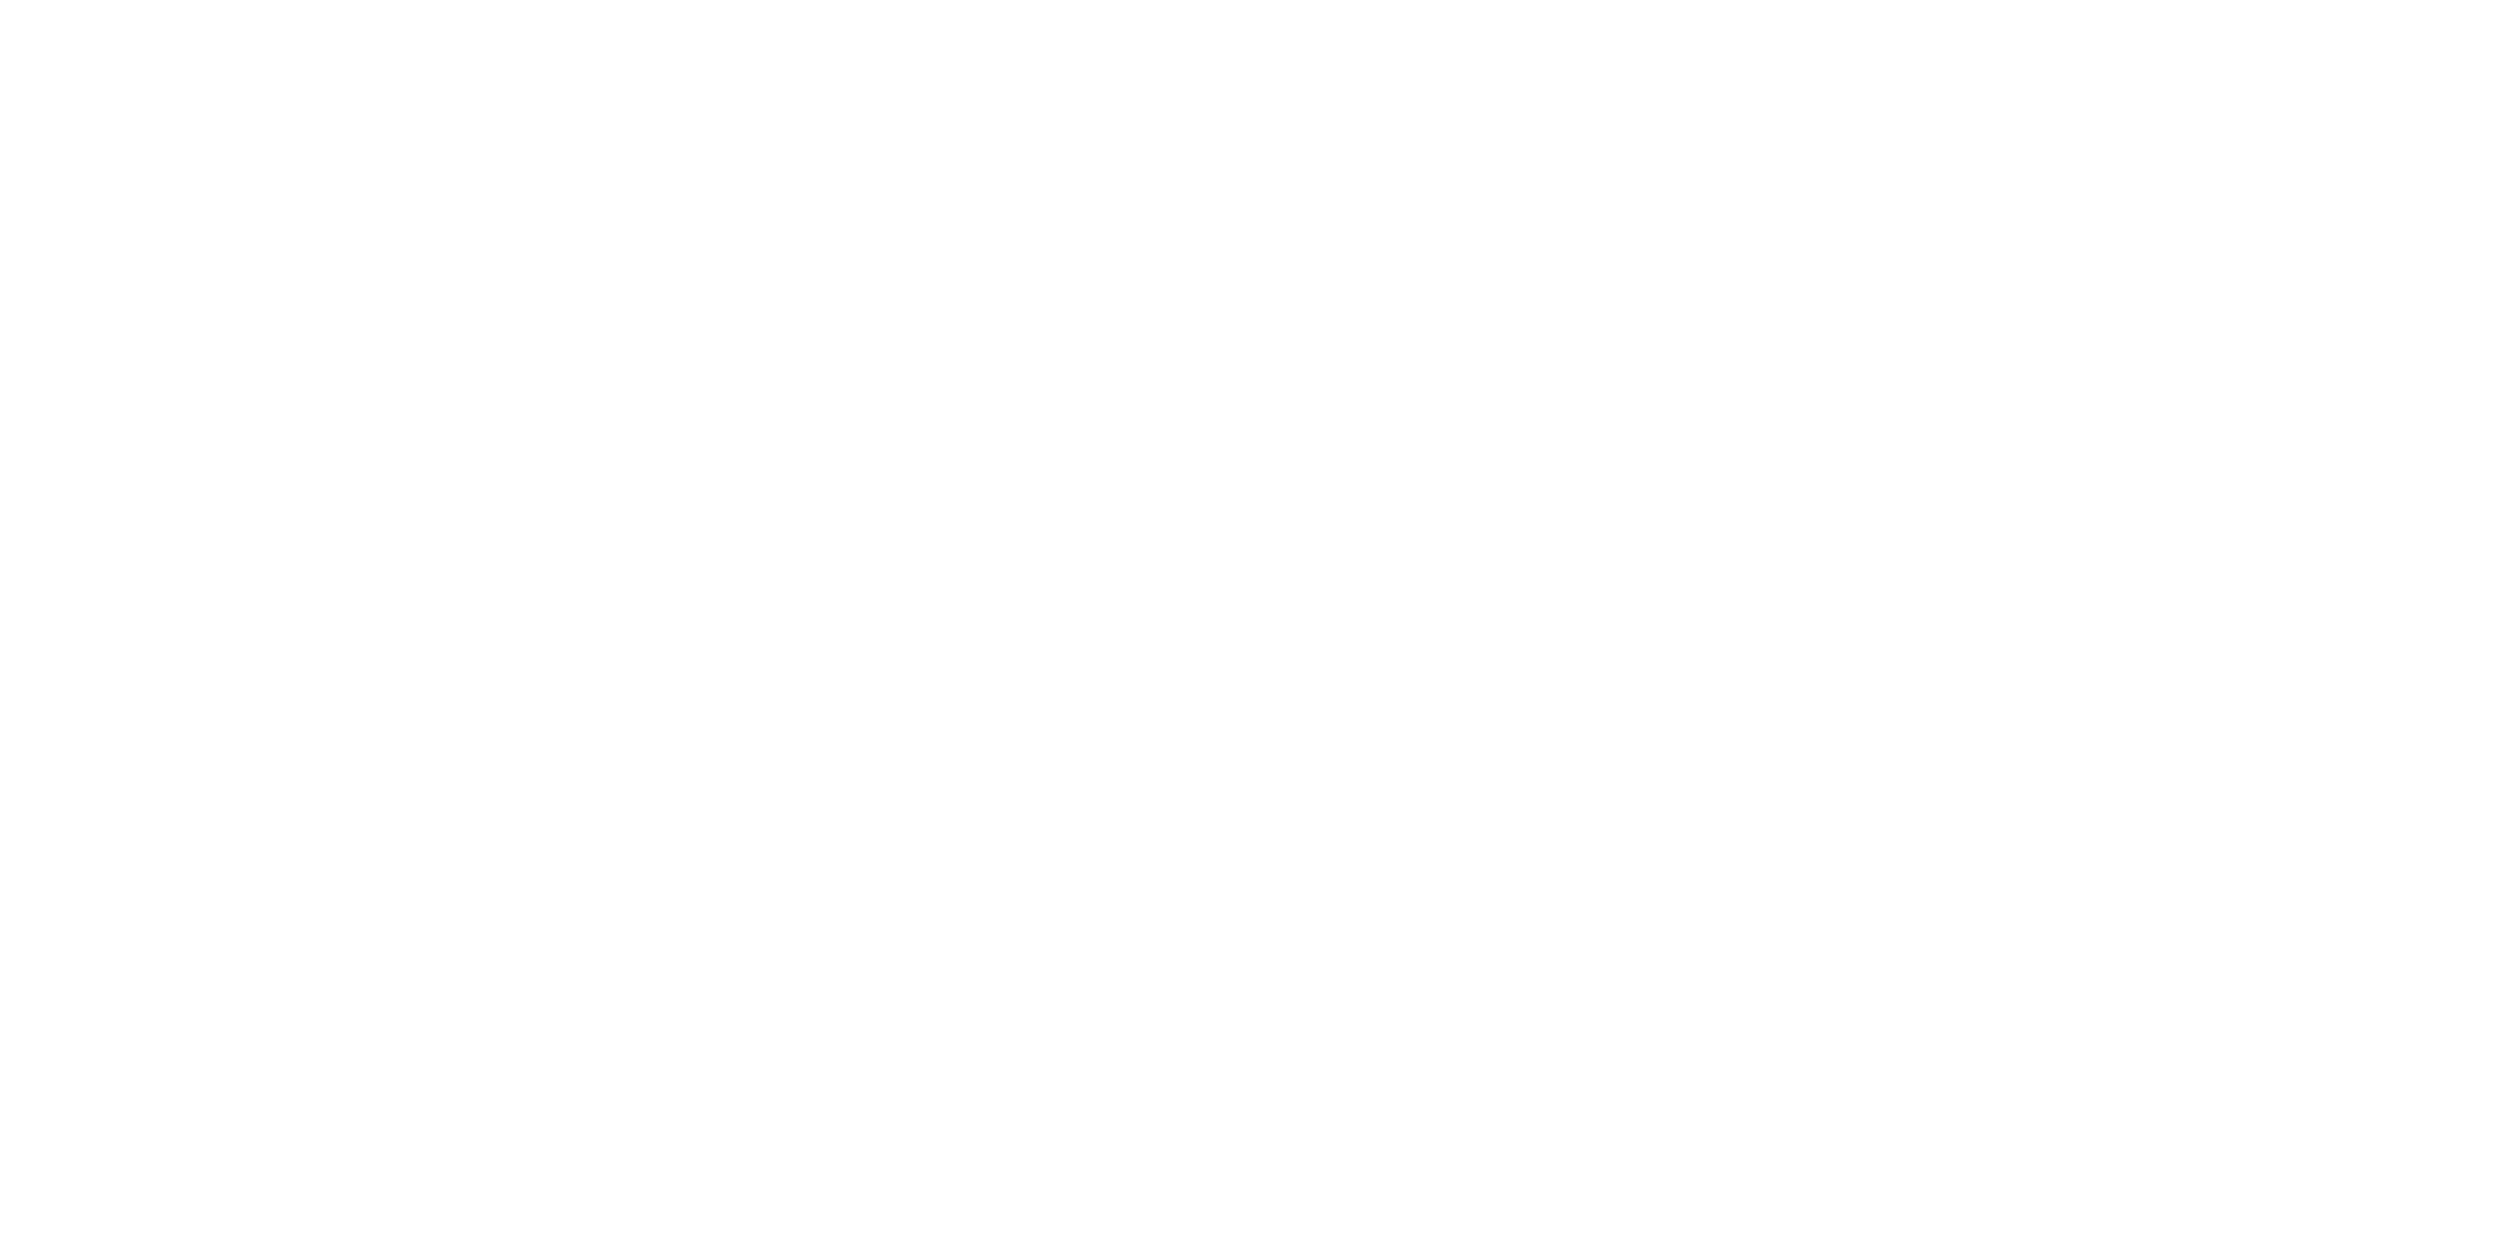 Eternal 831 logo